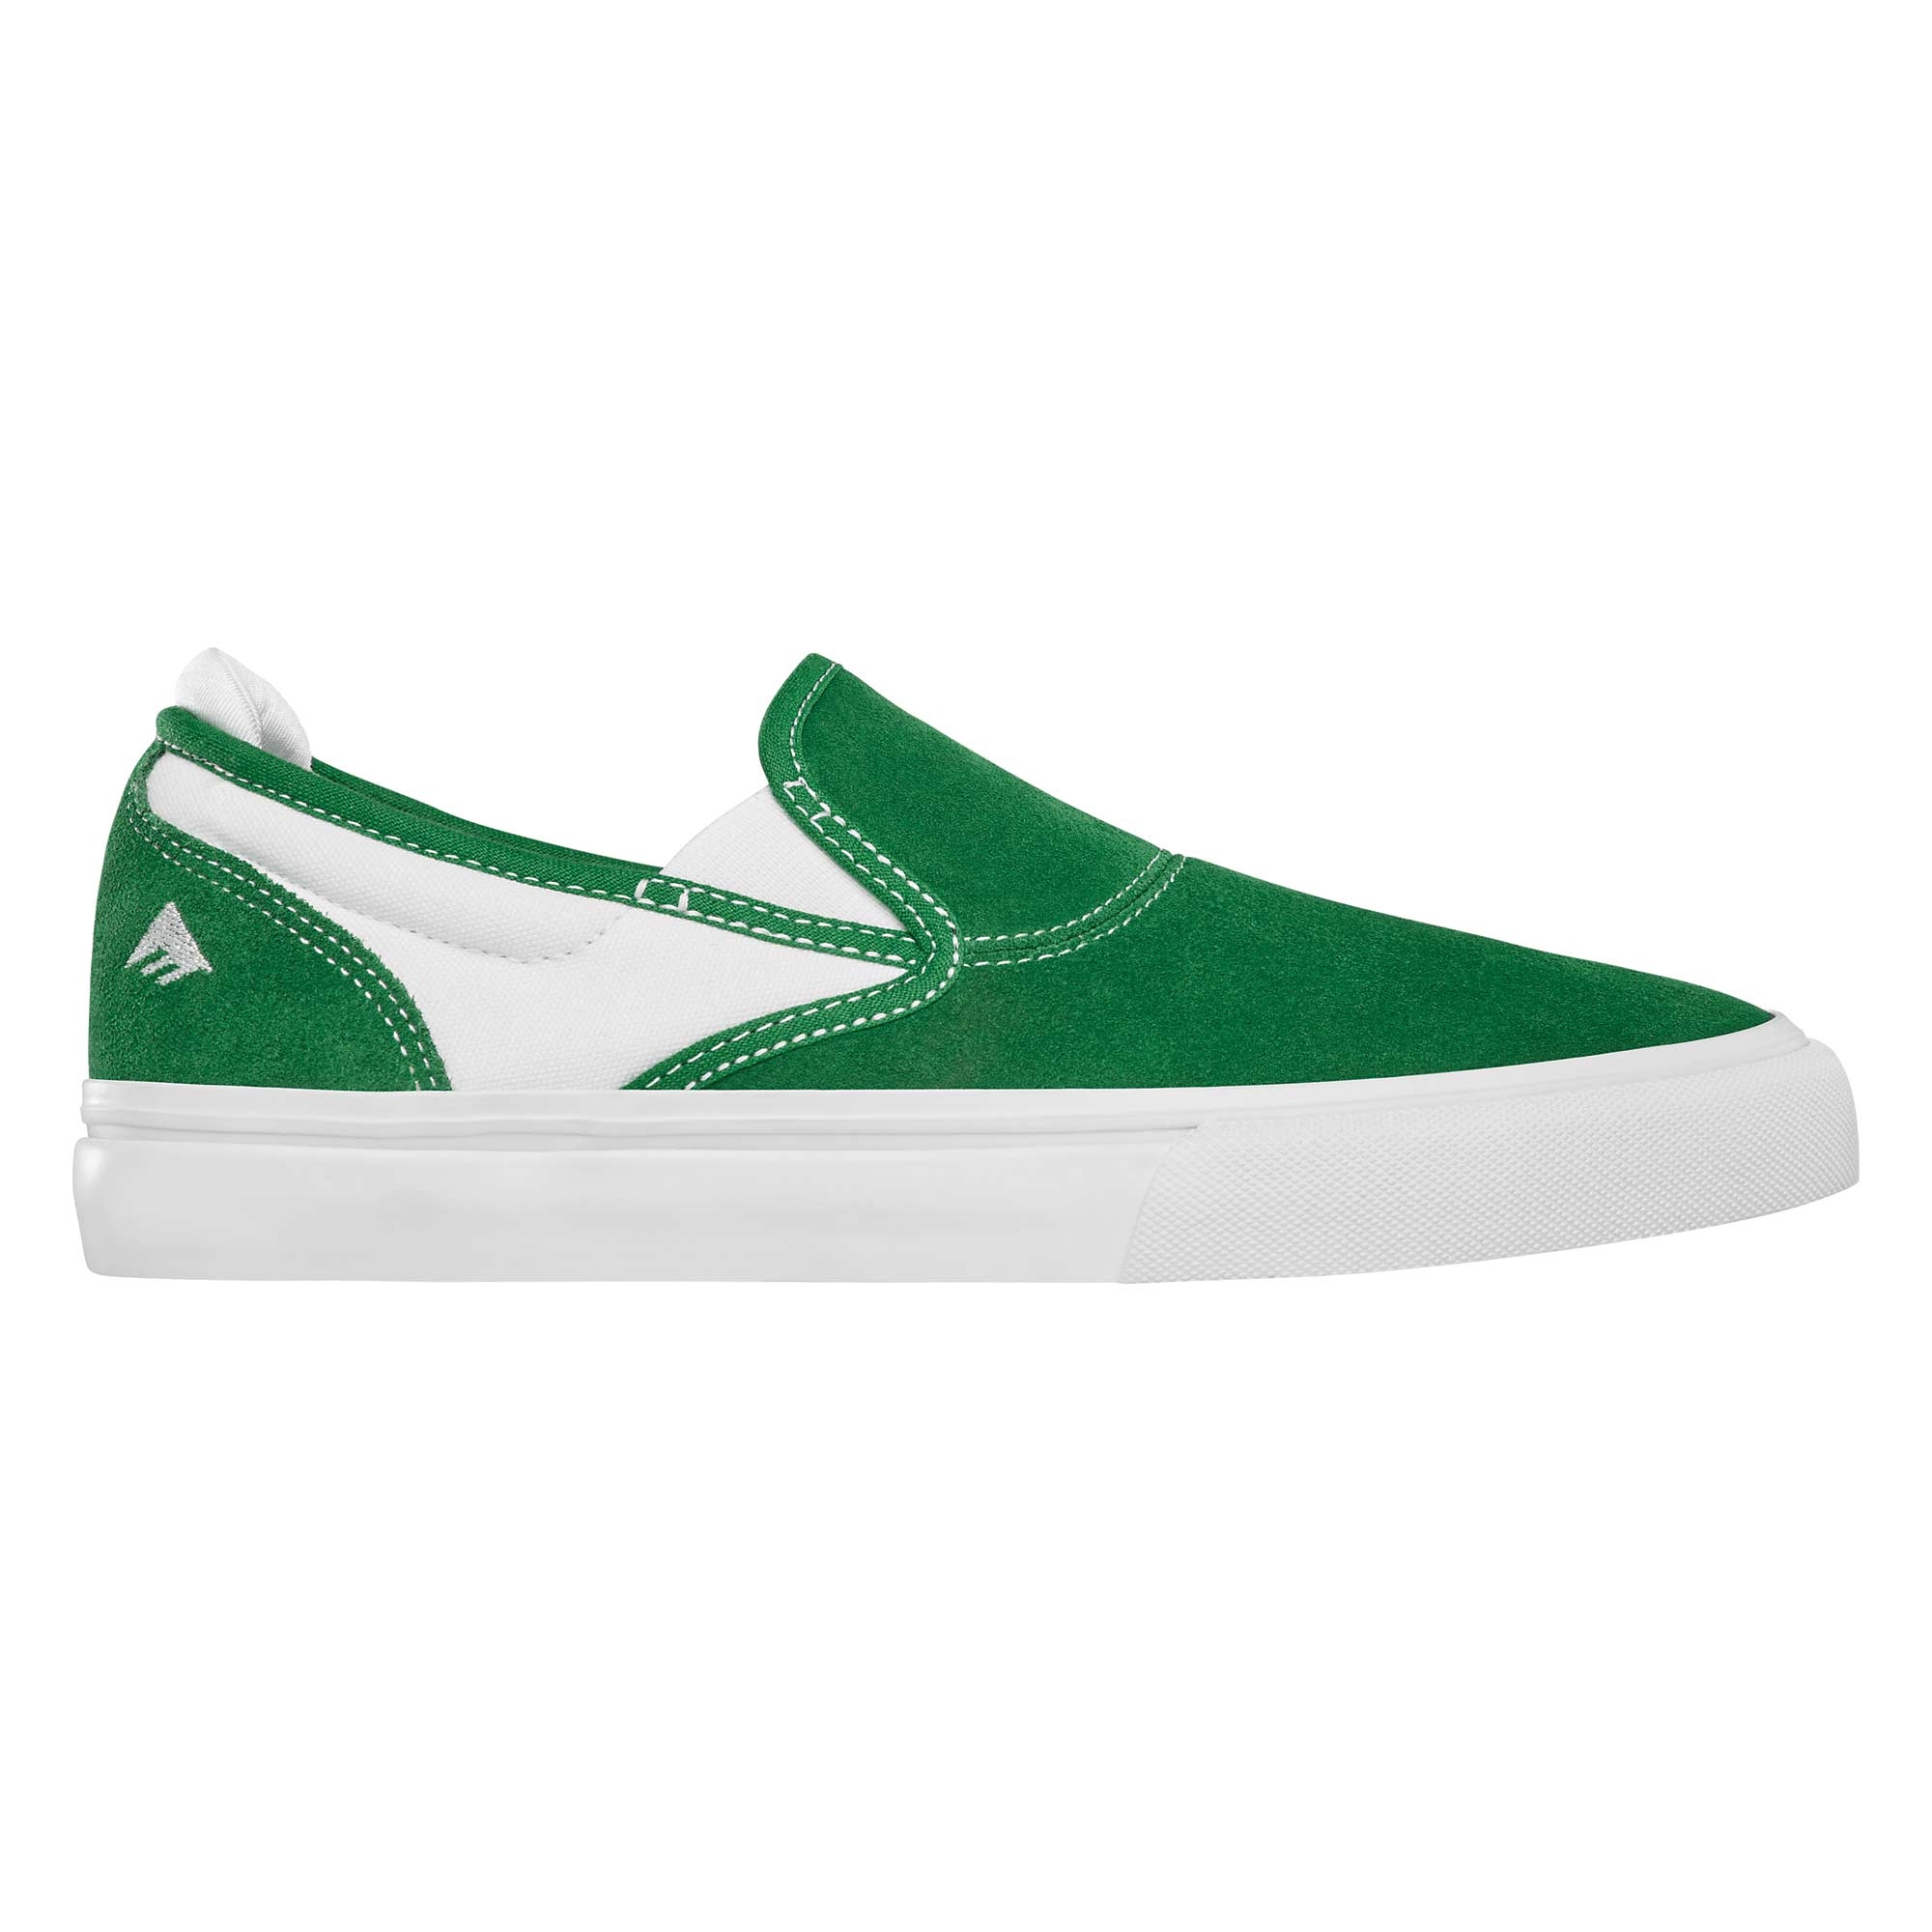 EMERICA Shoe WINO G6 SLIP-ON gre/whi/gum green/white/gum